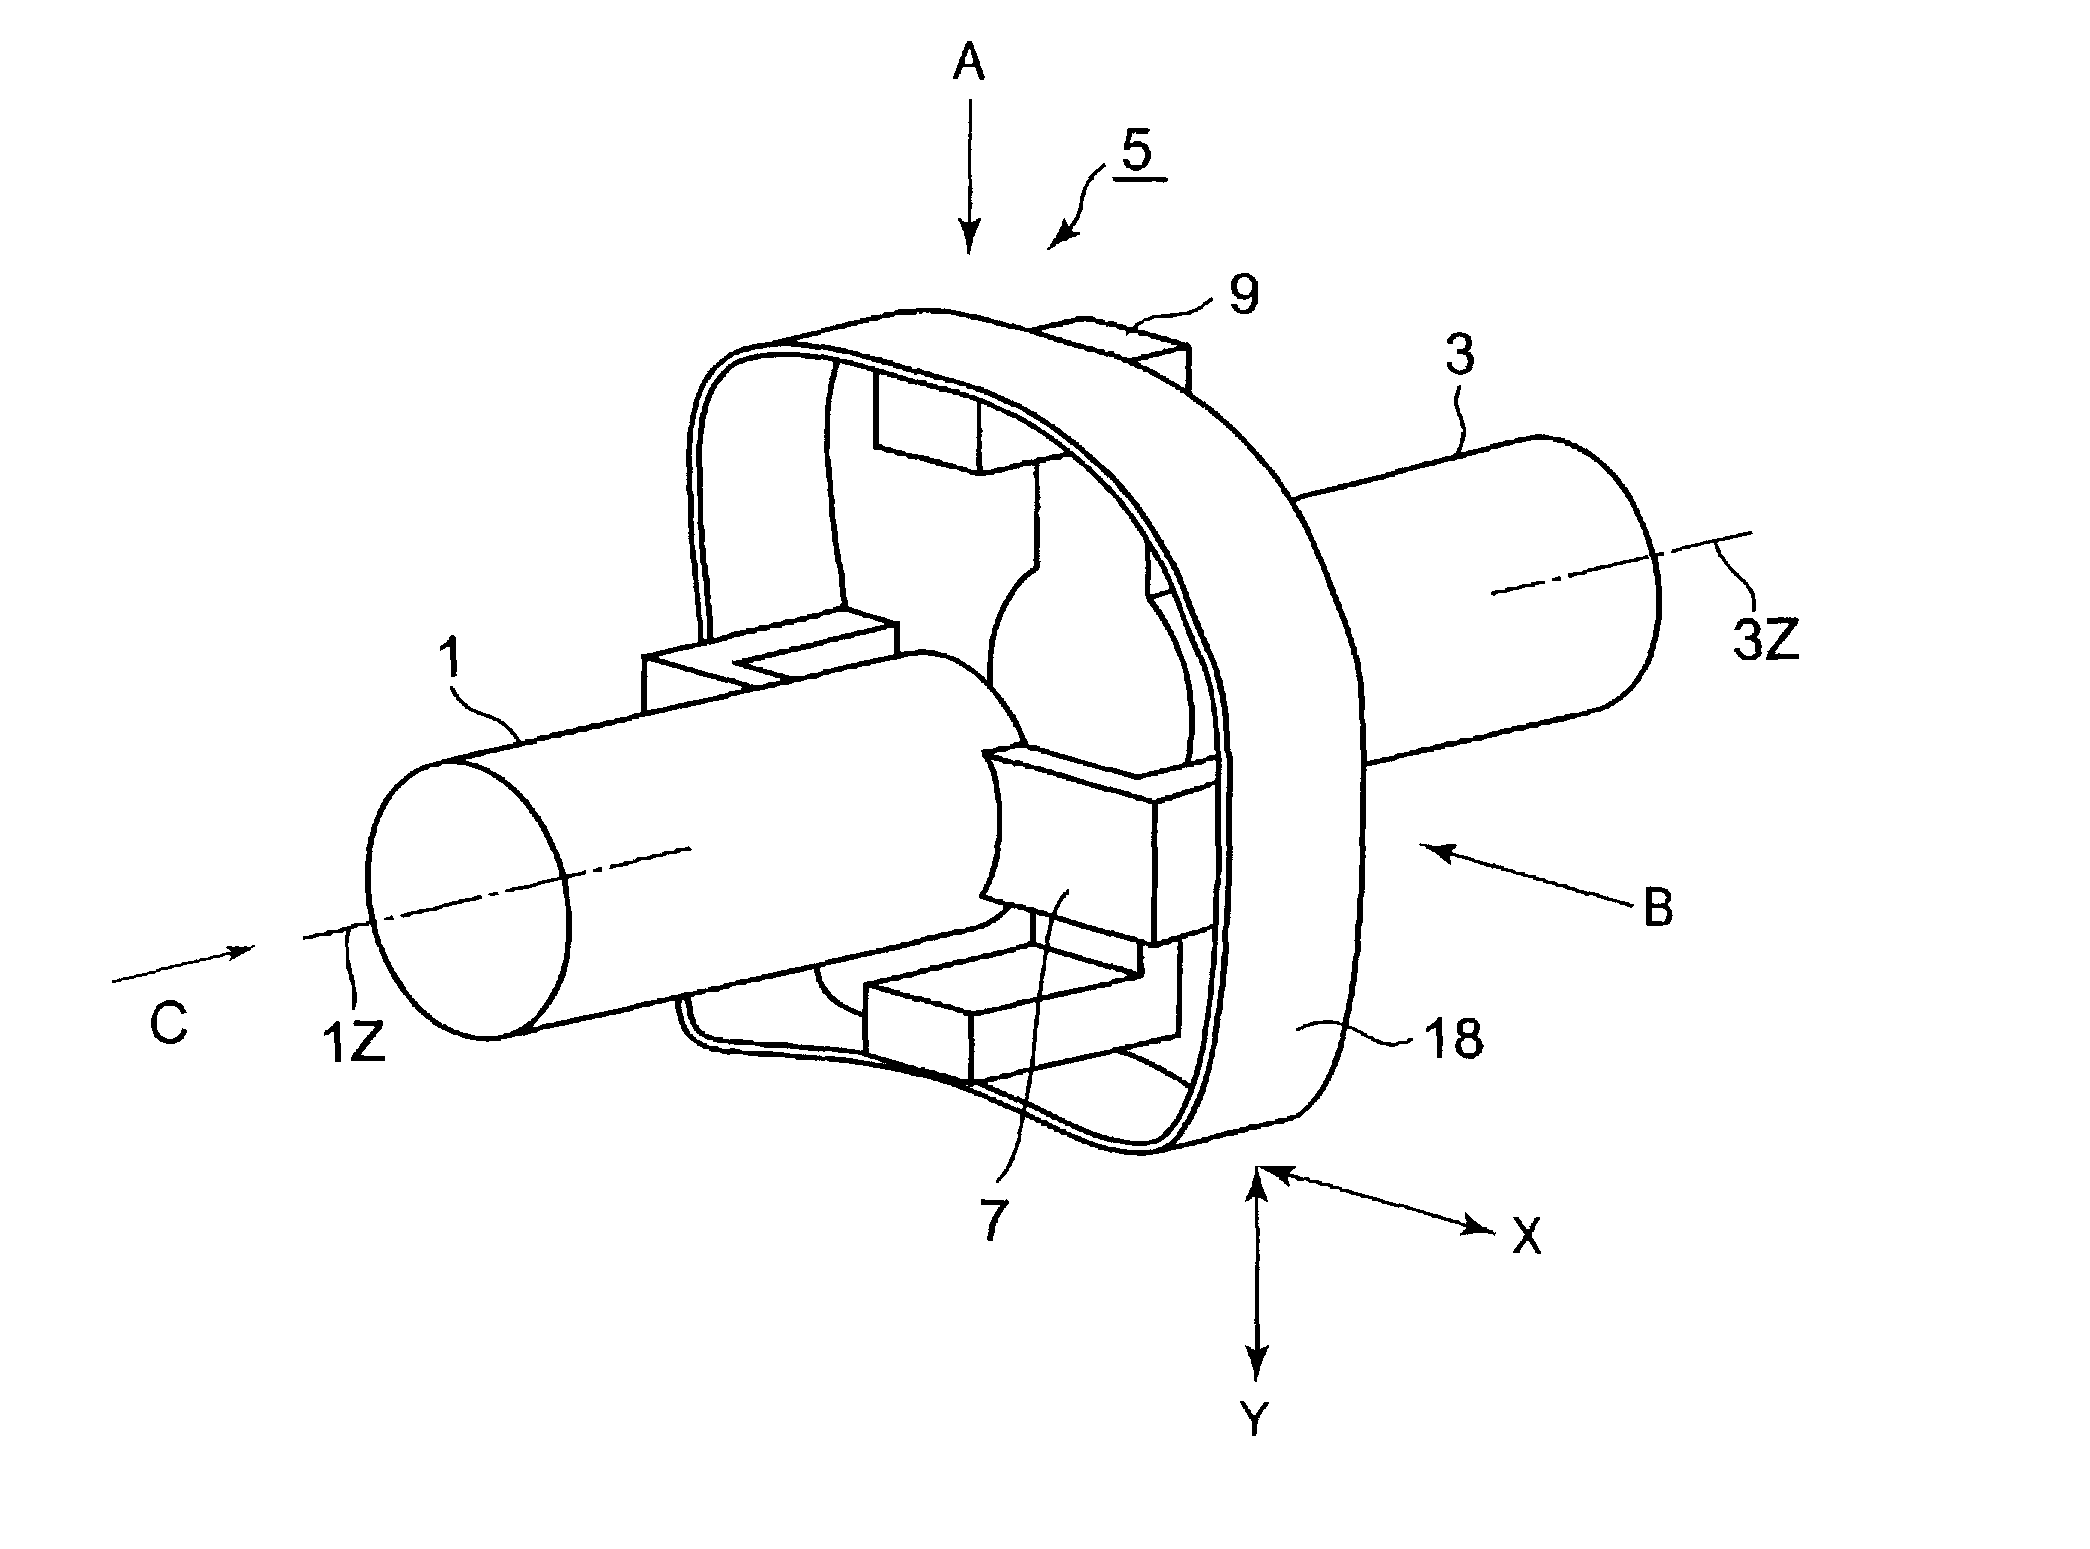 Scroll fluid machine having a coupling mechanism to allow relative orbiting movement of scrolls